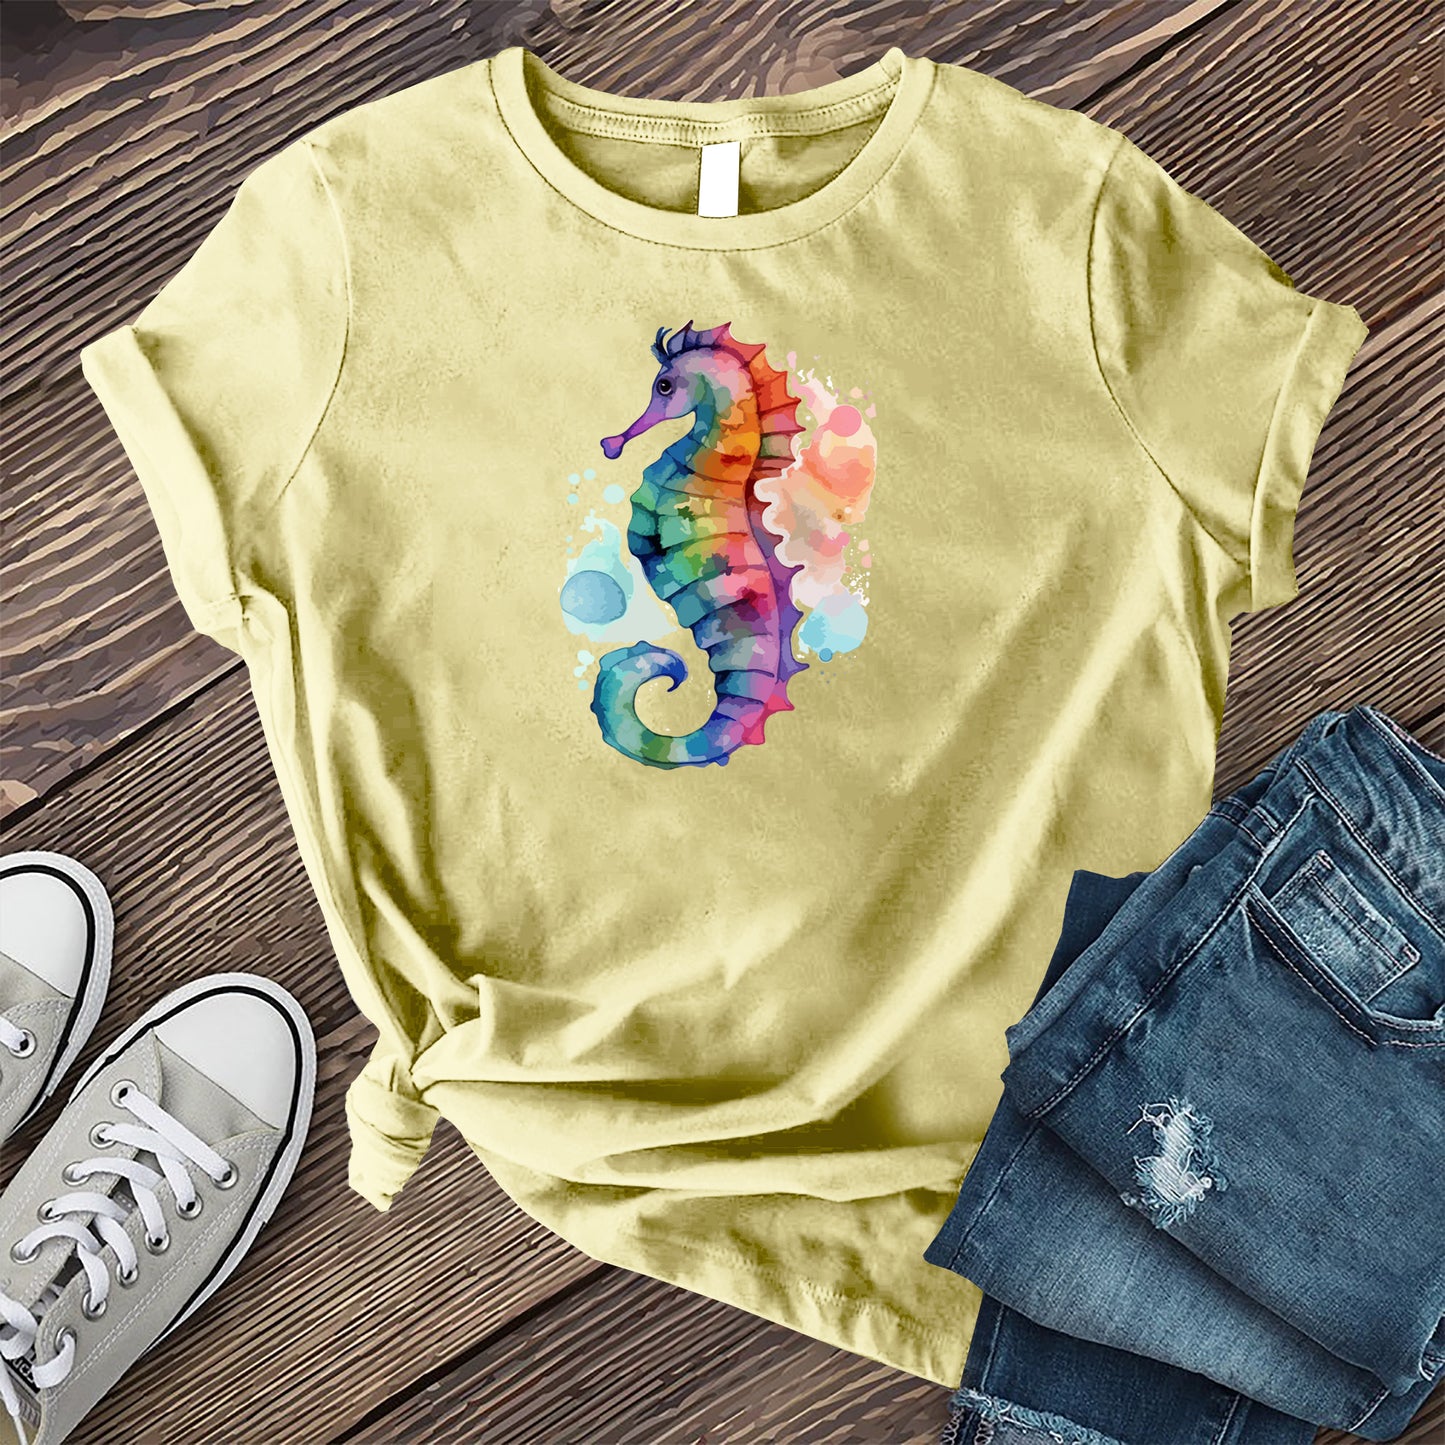 Watercolor Seahorse T-Shirt